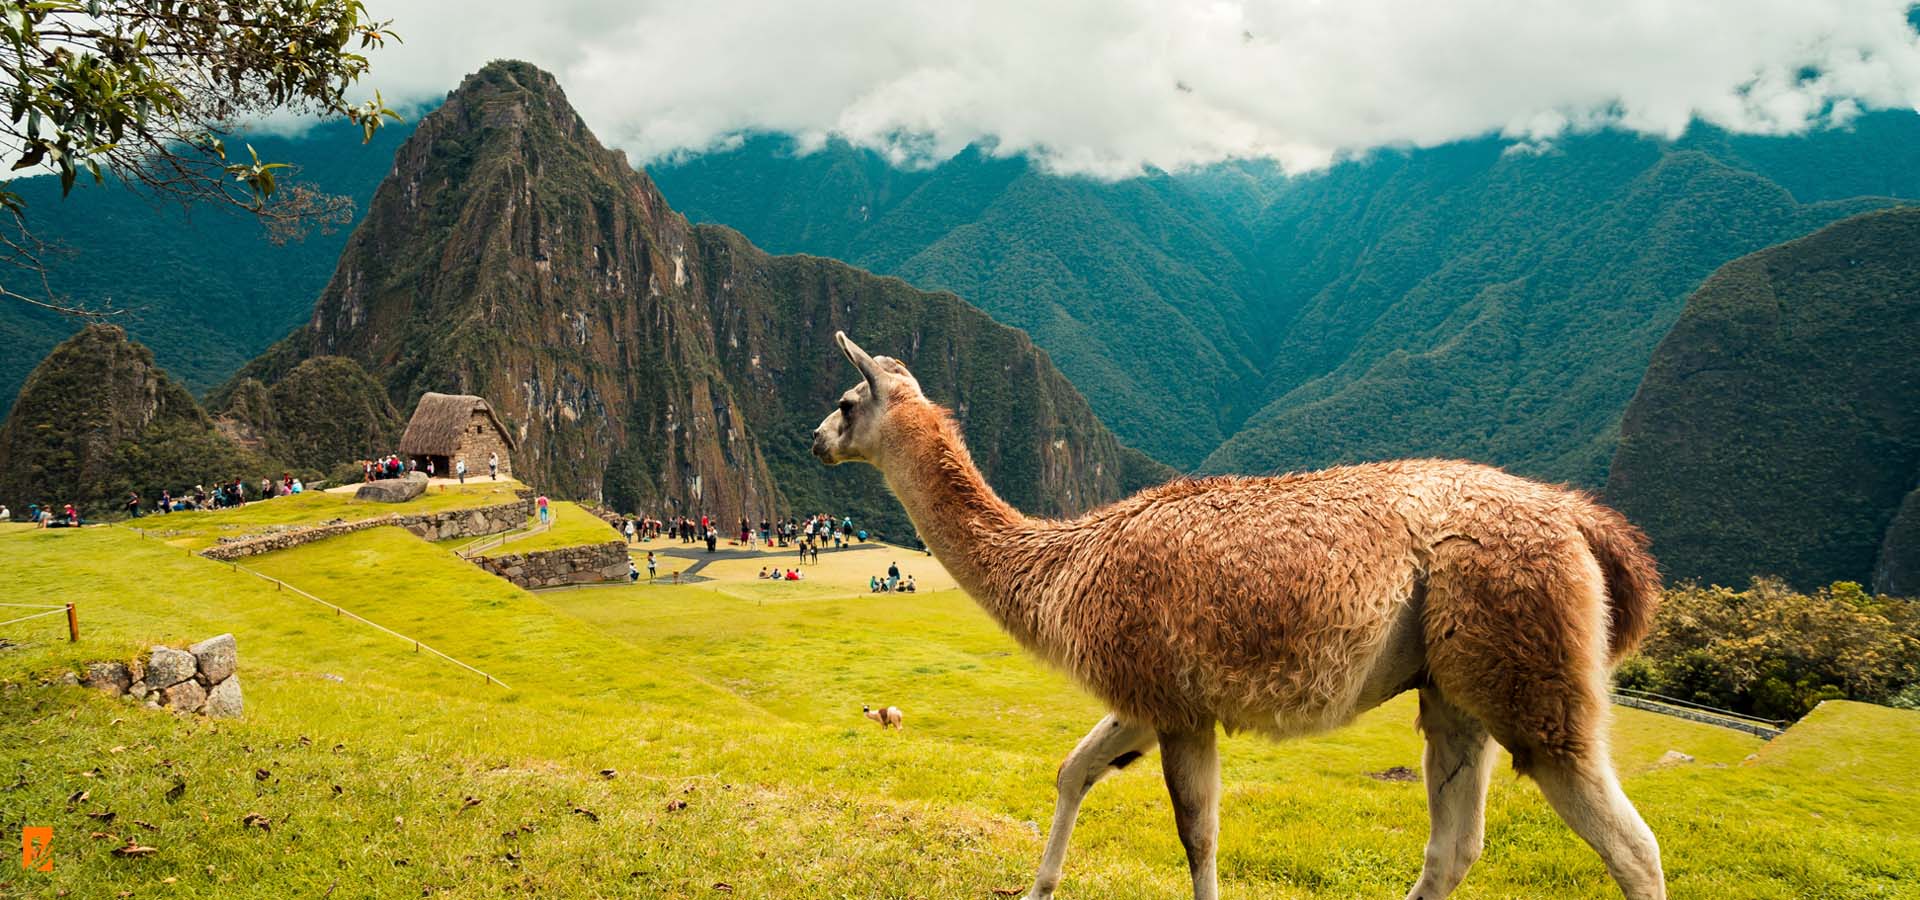 Hiking the Inca Trail in June & Trekking Tips - Sam Corporations